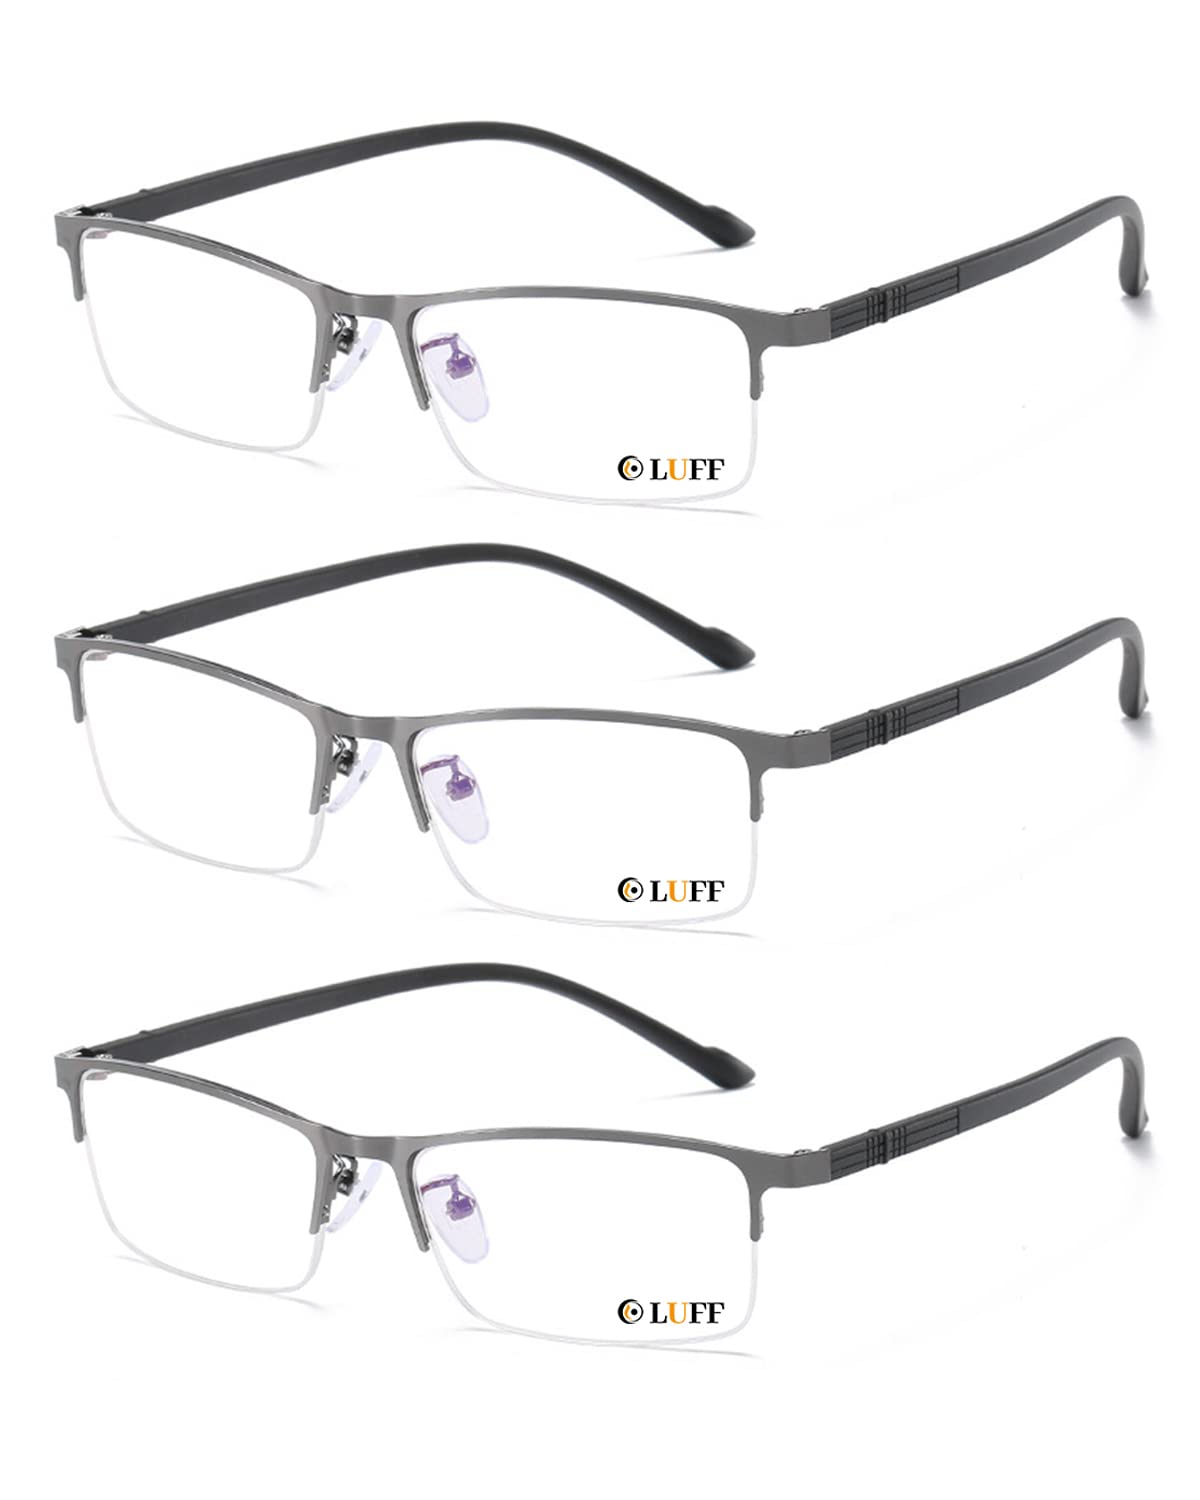 LUFF Reading Glasses 3PCS Half Frame Metal Readers for Men and Women Rectangle Blue Light Blocking eyeglasses with Comfort